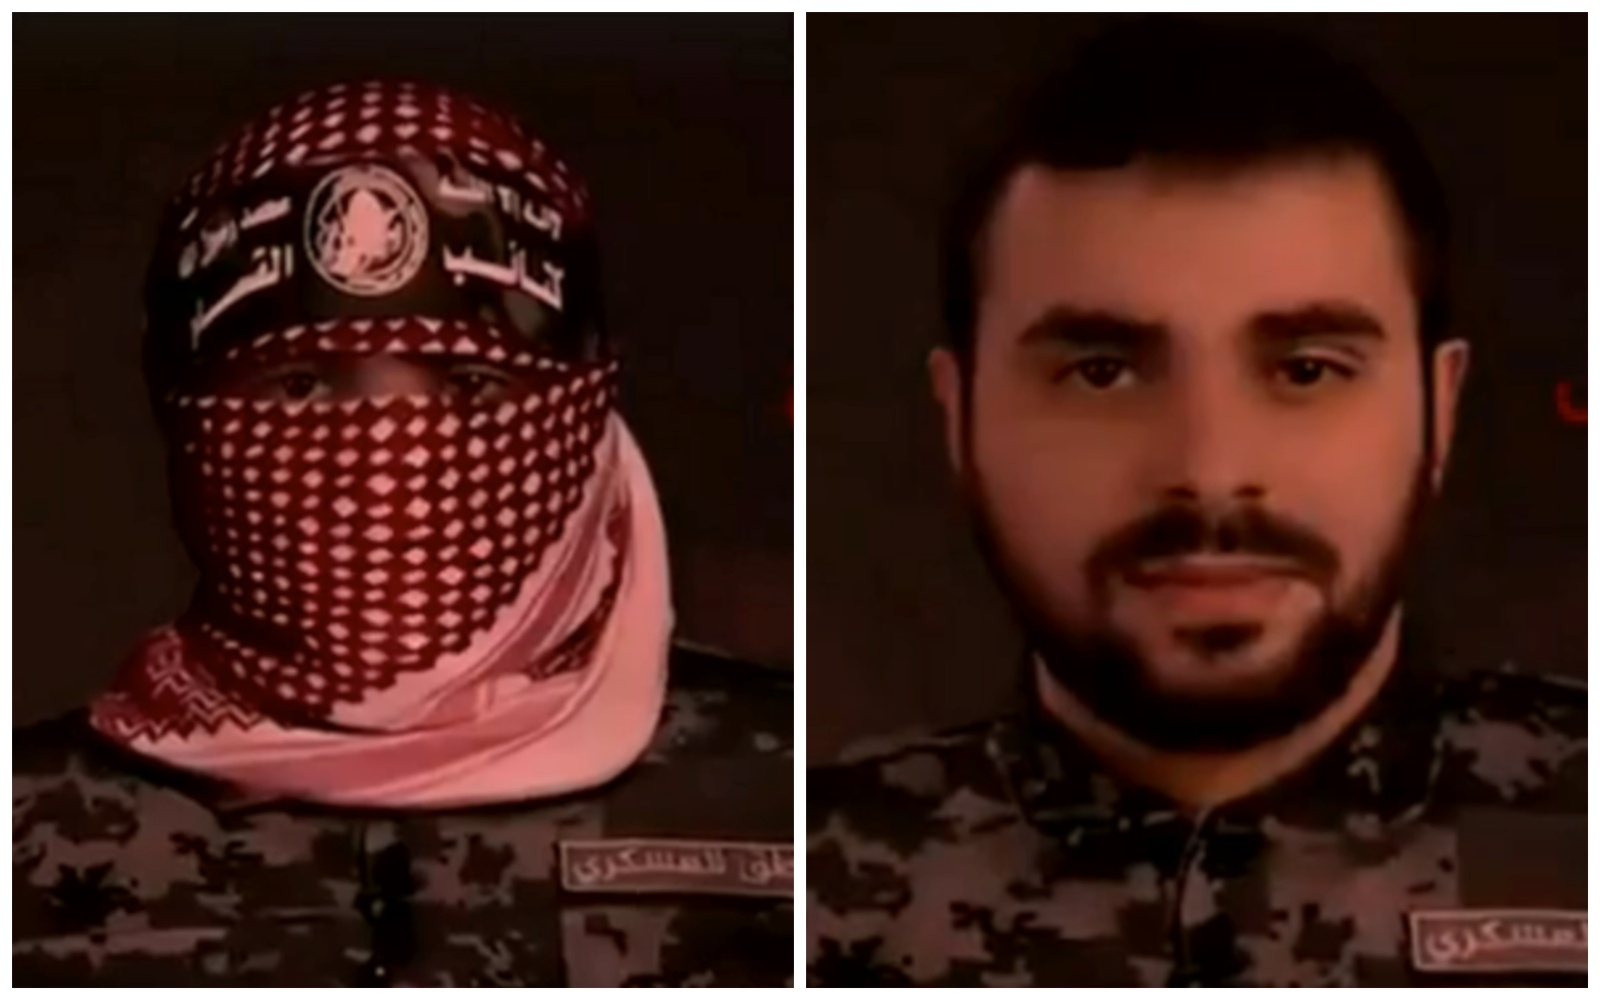 IDF claims to reveal identity of Hamas's military spokesman Abu Ubeida